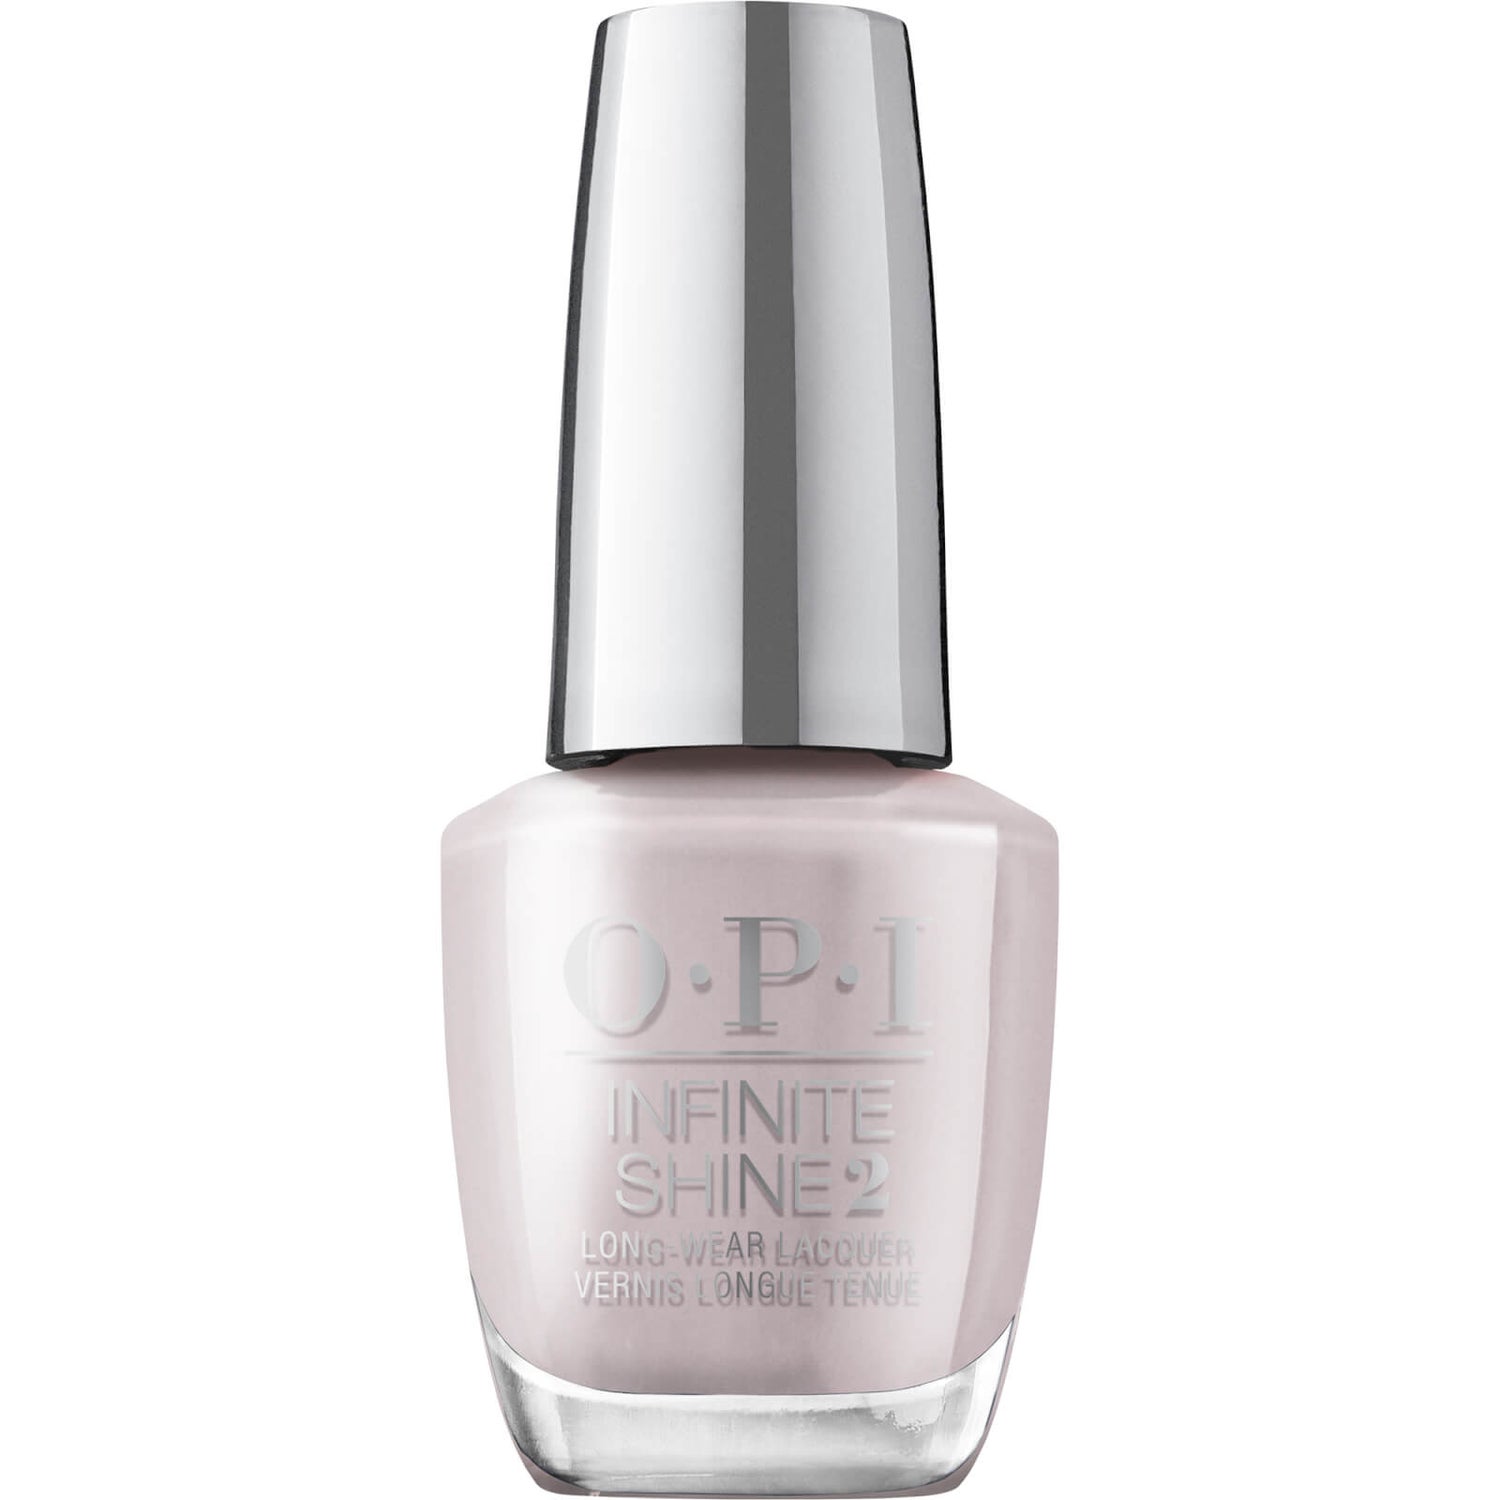 OPI Infinite Shine - Gel like Nail Polish - Peace of Mined Nude Fall Wonders Collection 15ml